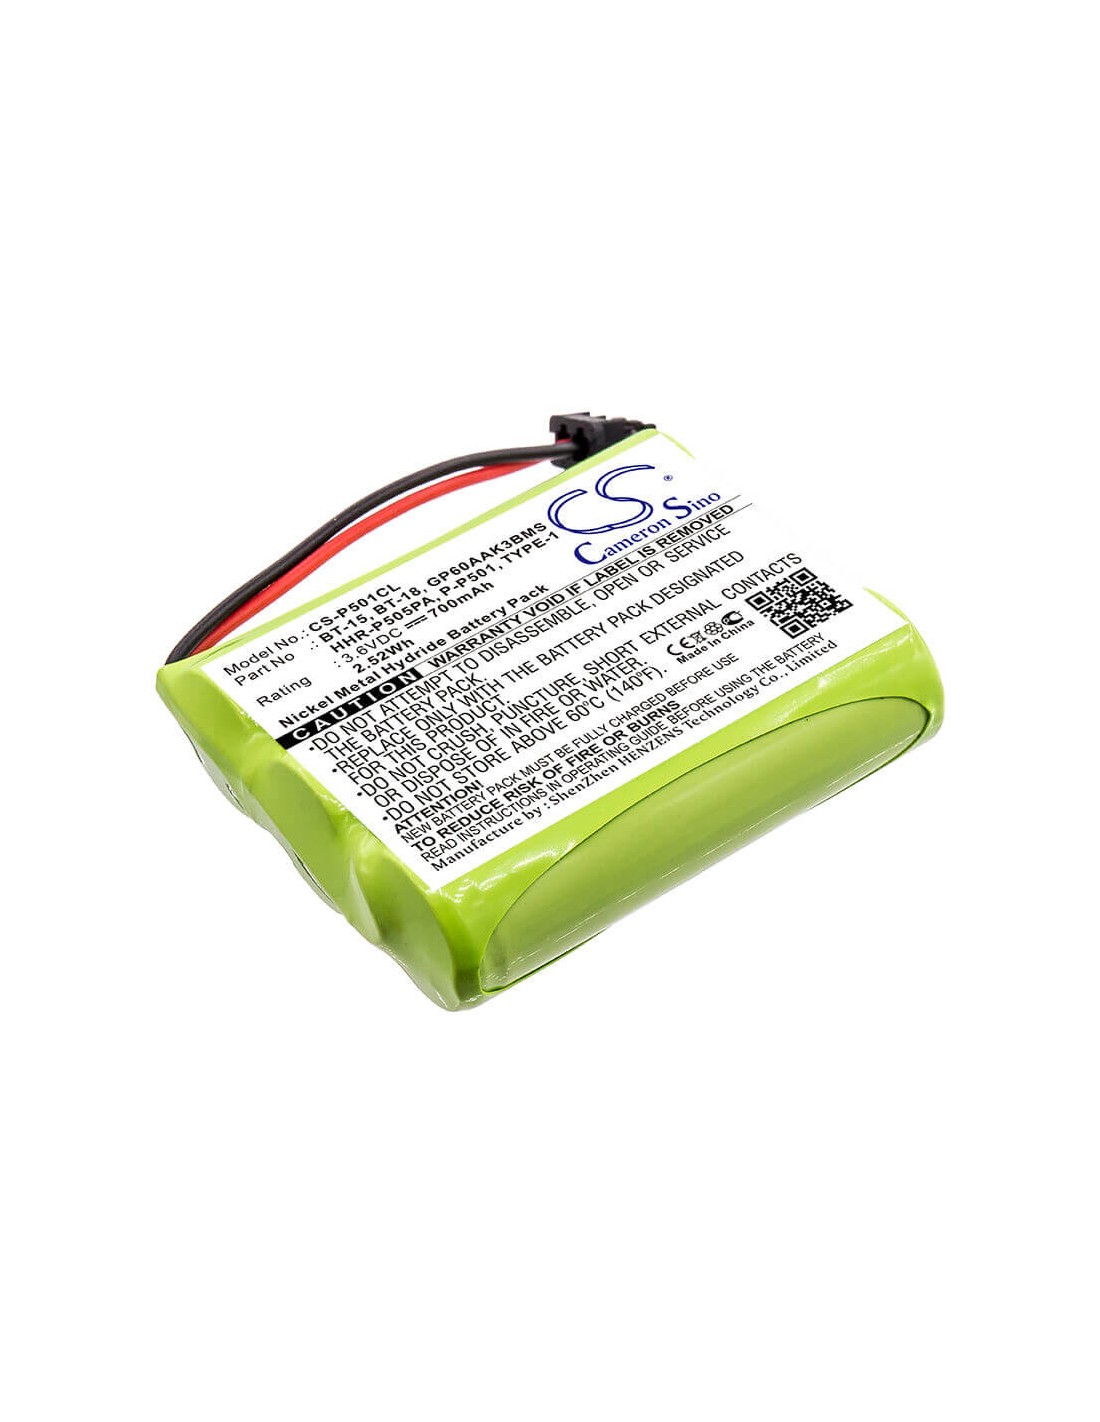 Battery for Sbc, Cl200, Cl300, Cl400, Cl405, 3.6V, 700mAh - 2.52Wh